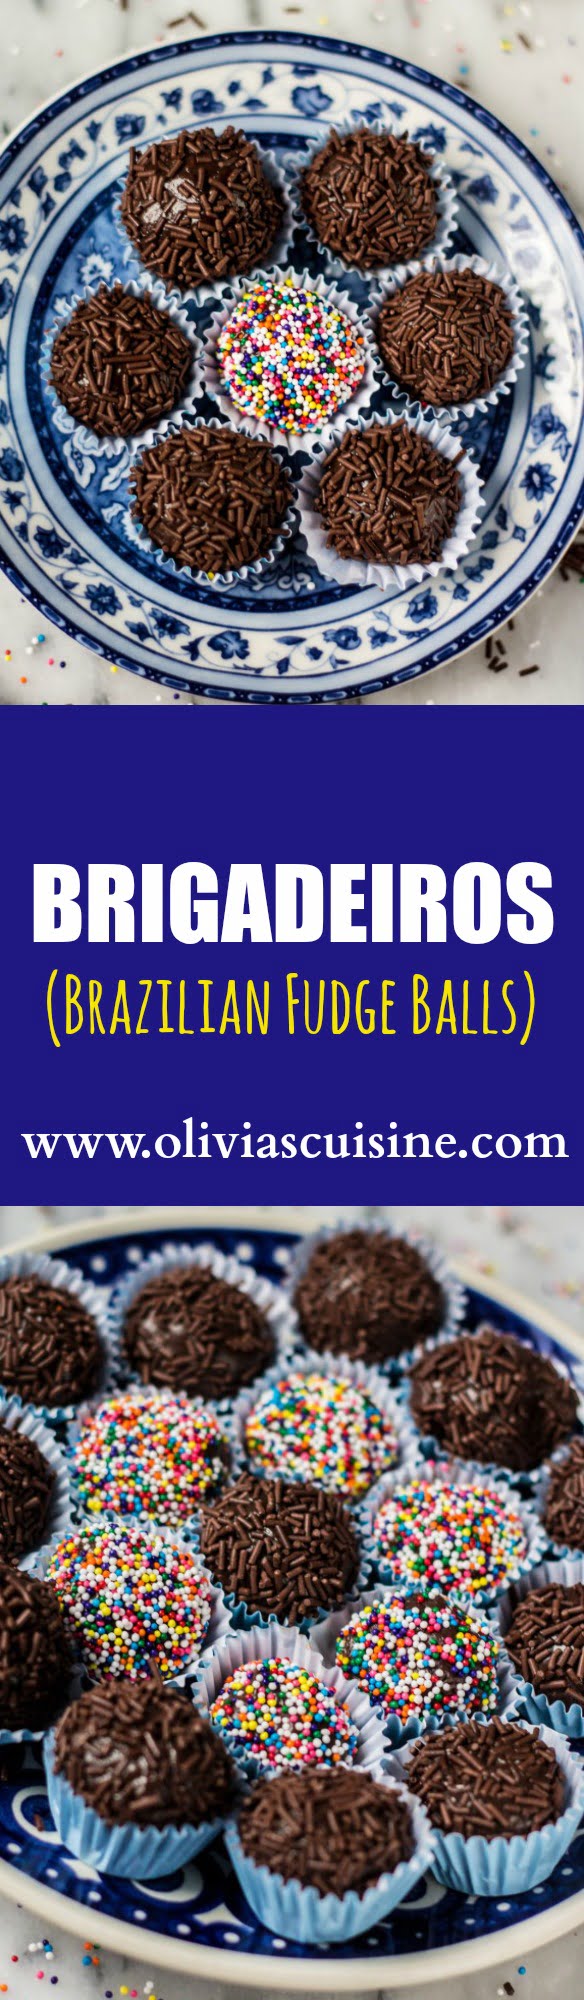 Traditional Brigadeiro (Brazilian Fudge Balls) | www.oliviascuisine.com | Brazil's favorite dessert: brigadeiro. Chocolate fudge balls made with sweet condensed milk, butter and cocoa powder. So addicting!